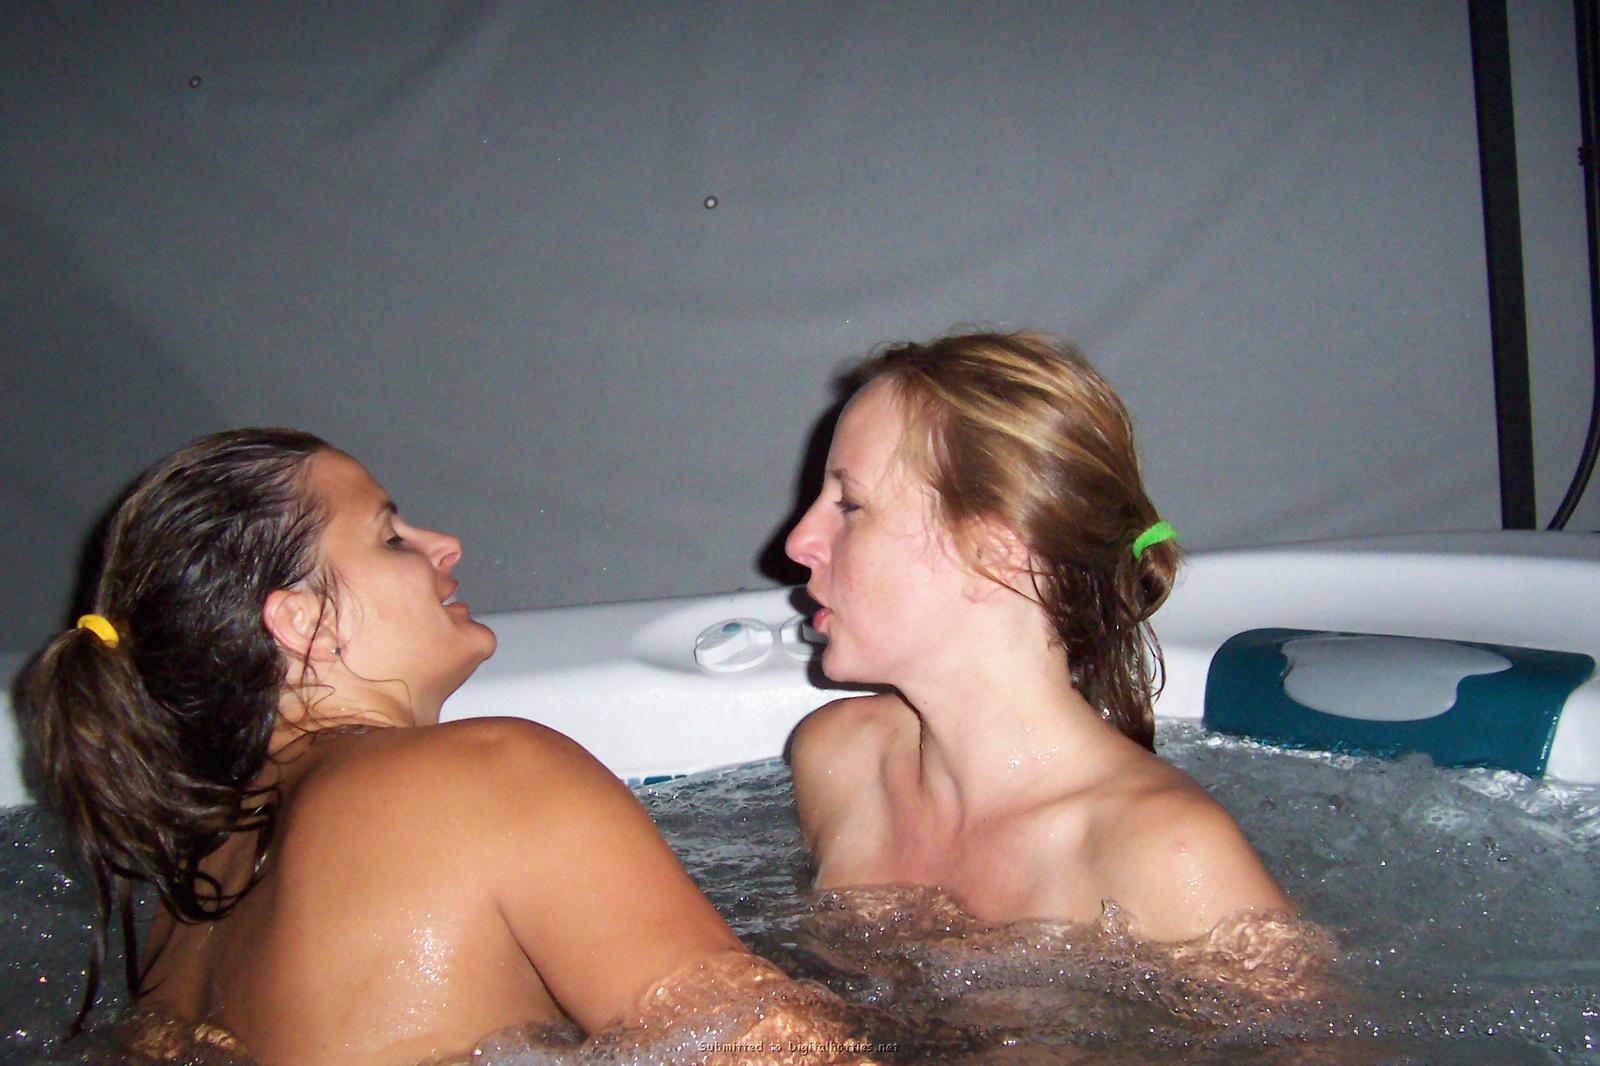 Amateur Lesbian Hot Tub - Free Sex Images, Hot Porn Photos and Best XXX  Pics on www.cafesex.net